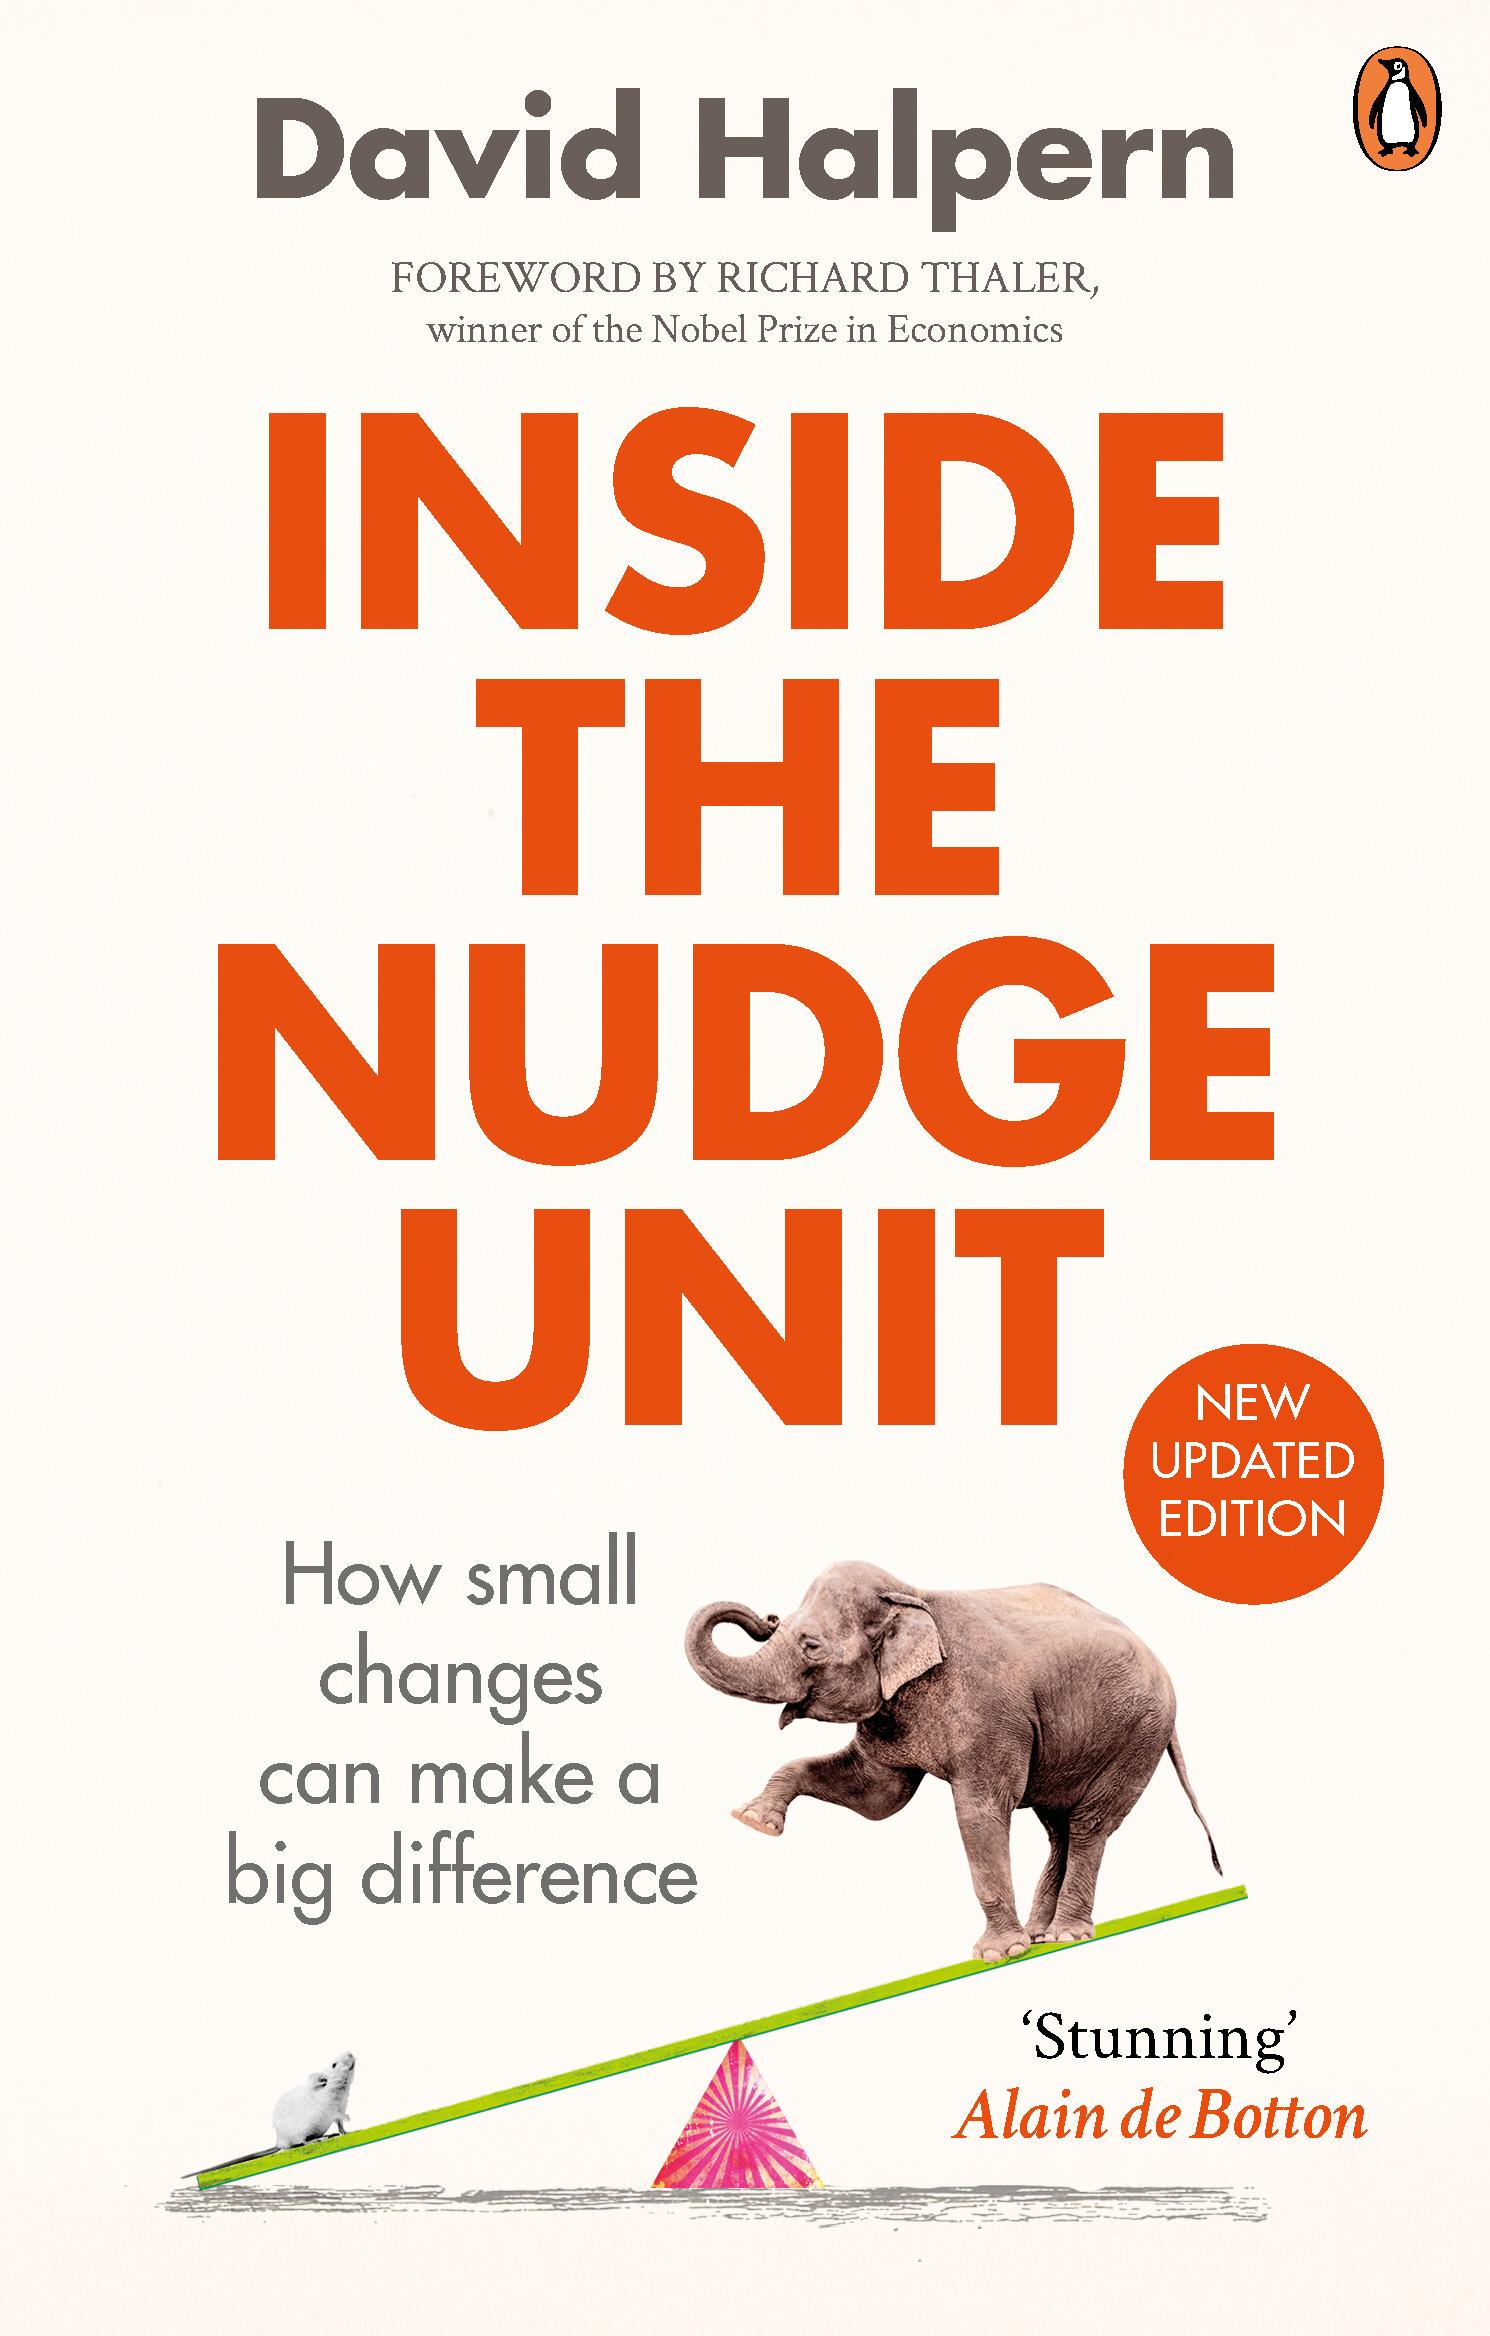 Inside the Nudge Unit - David Halpern